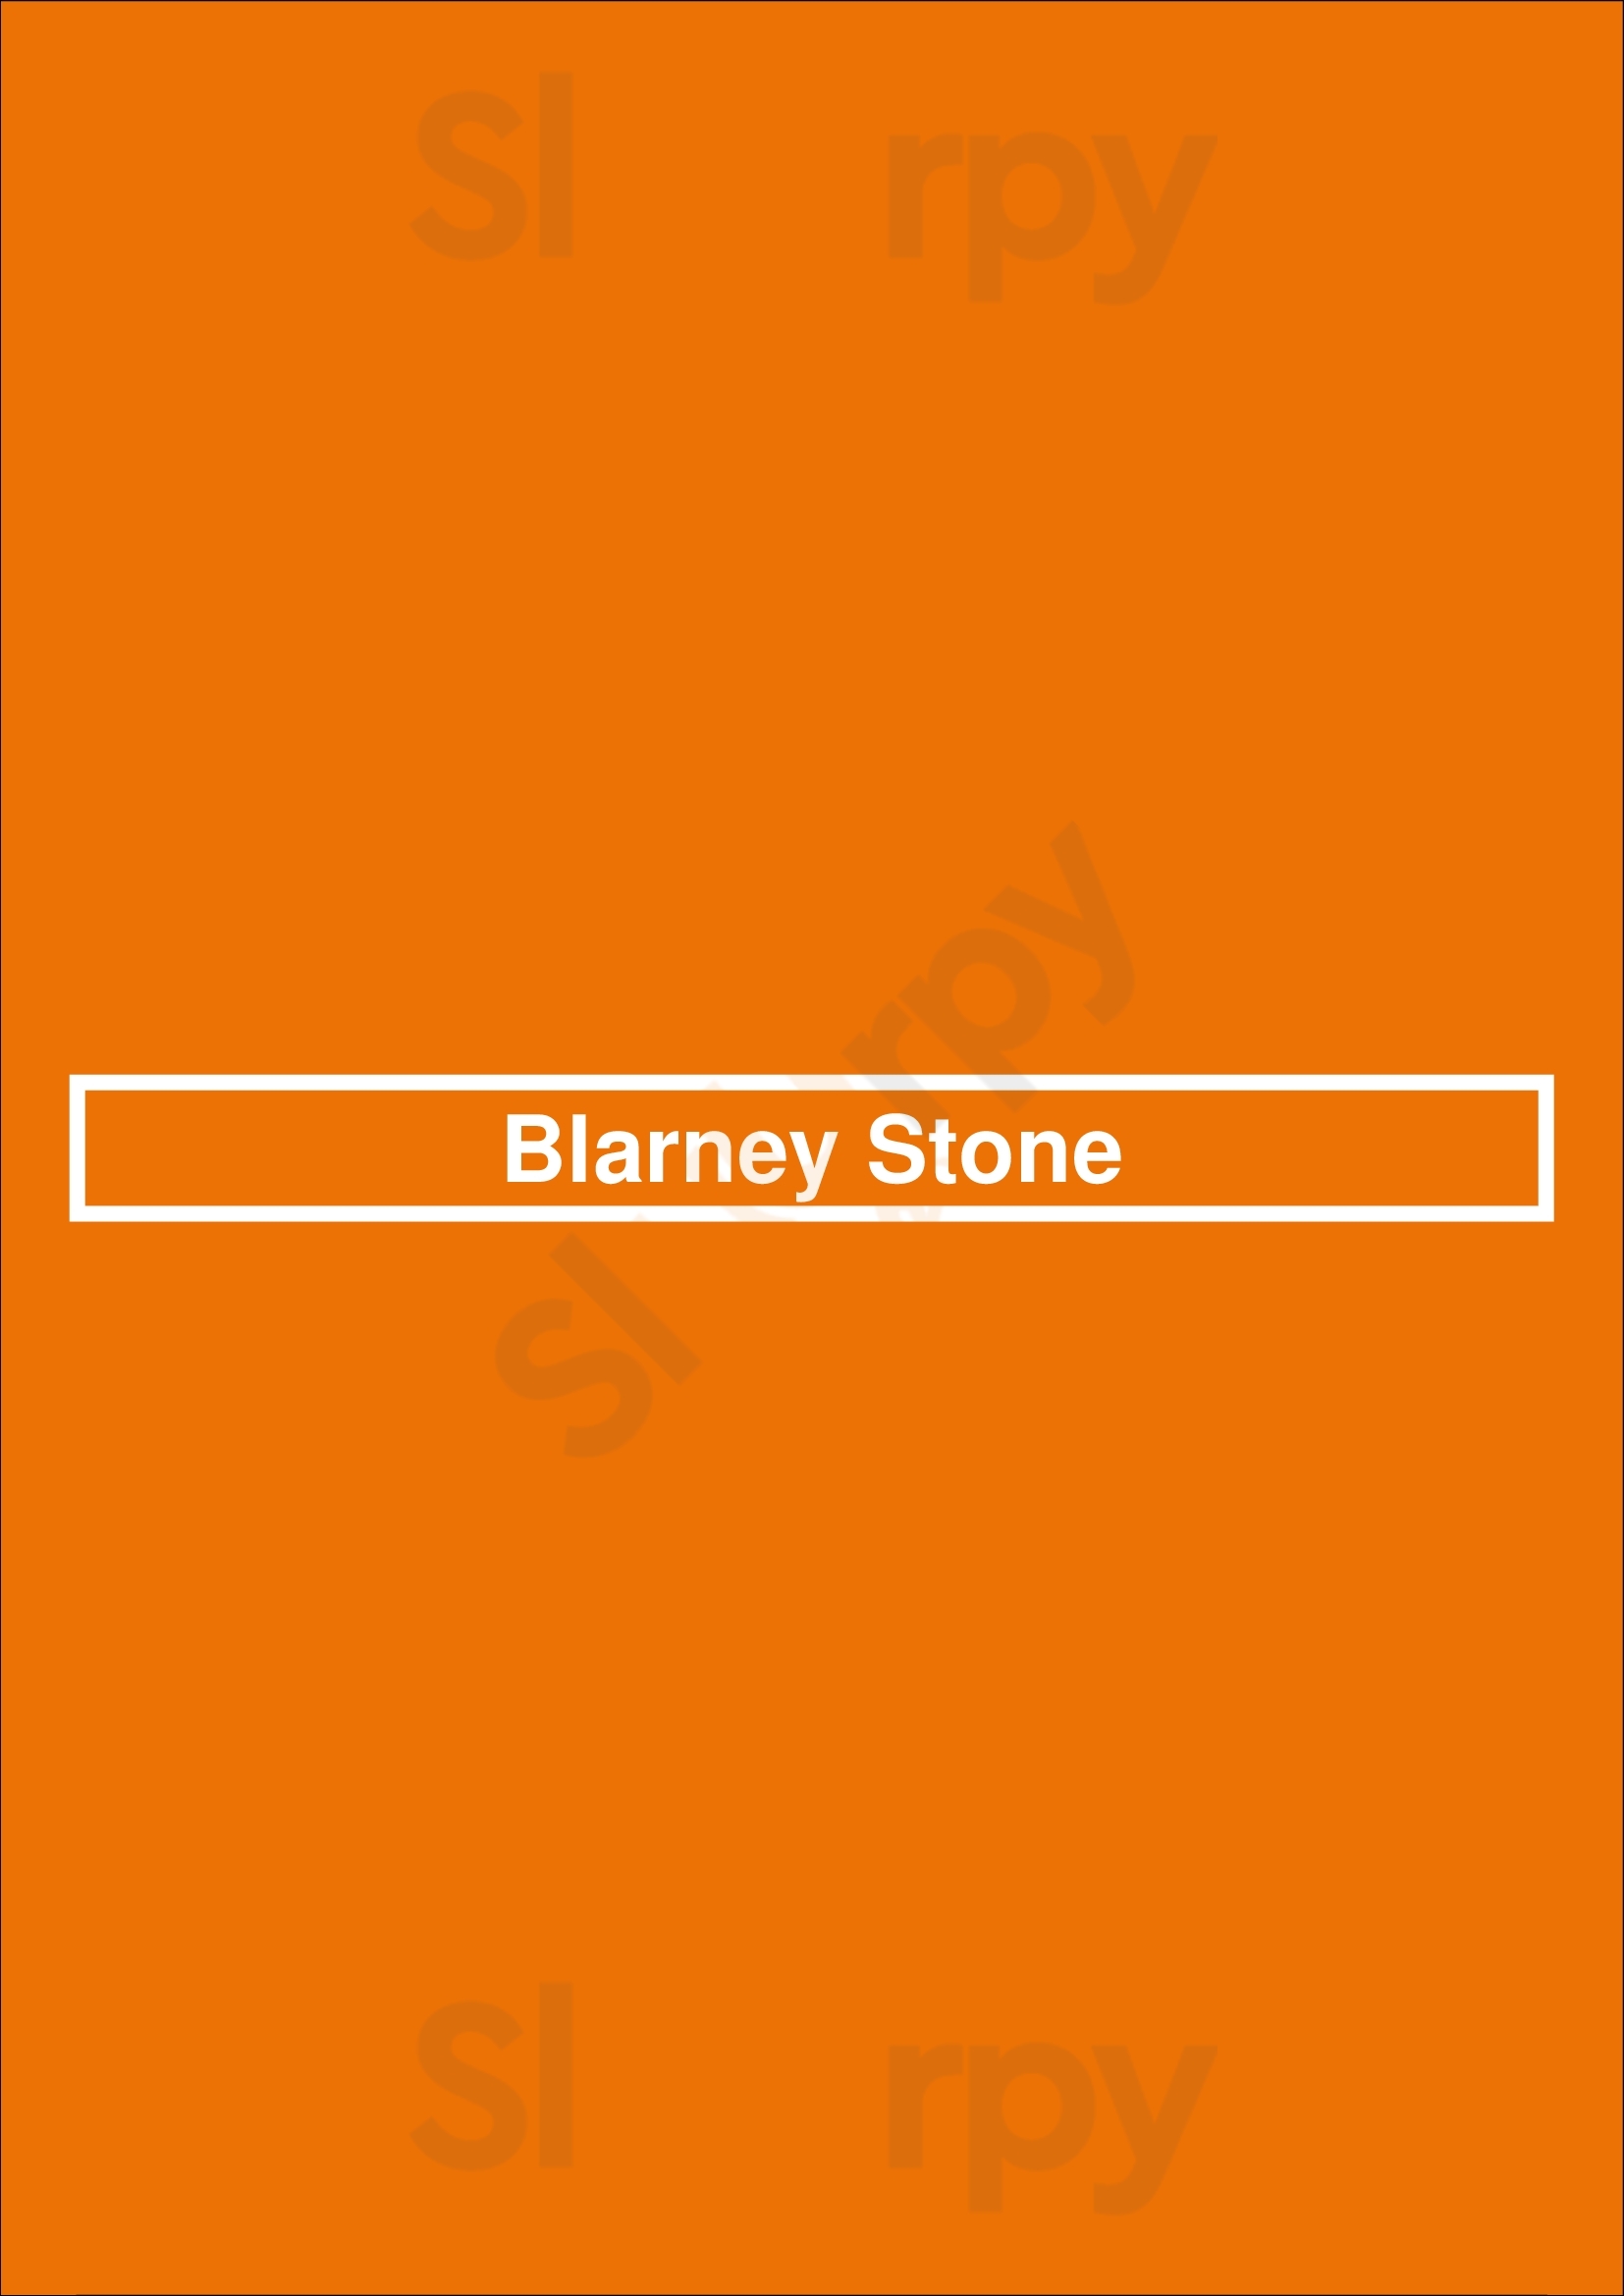 Blarney Stone Vancouver Menu - 1